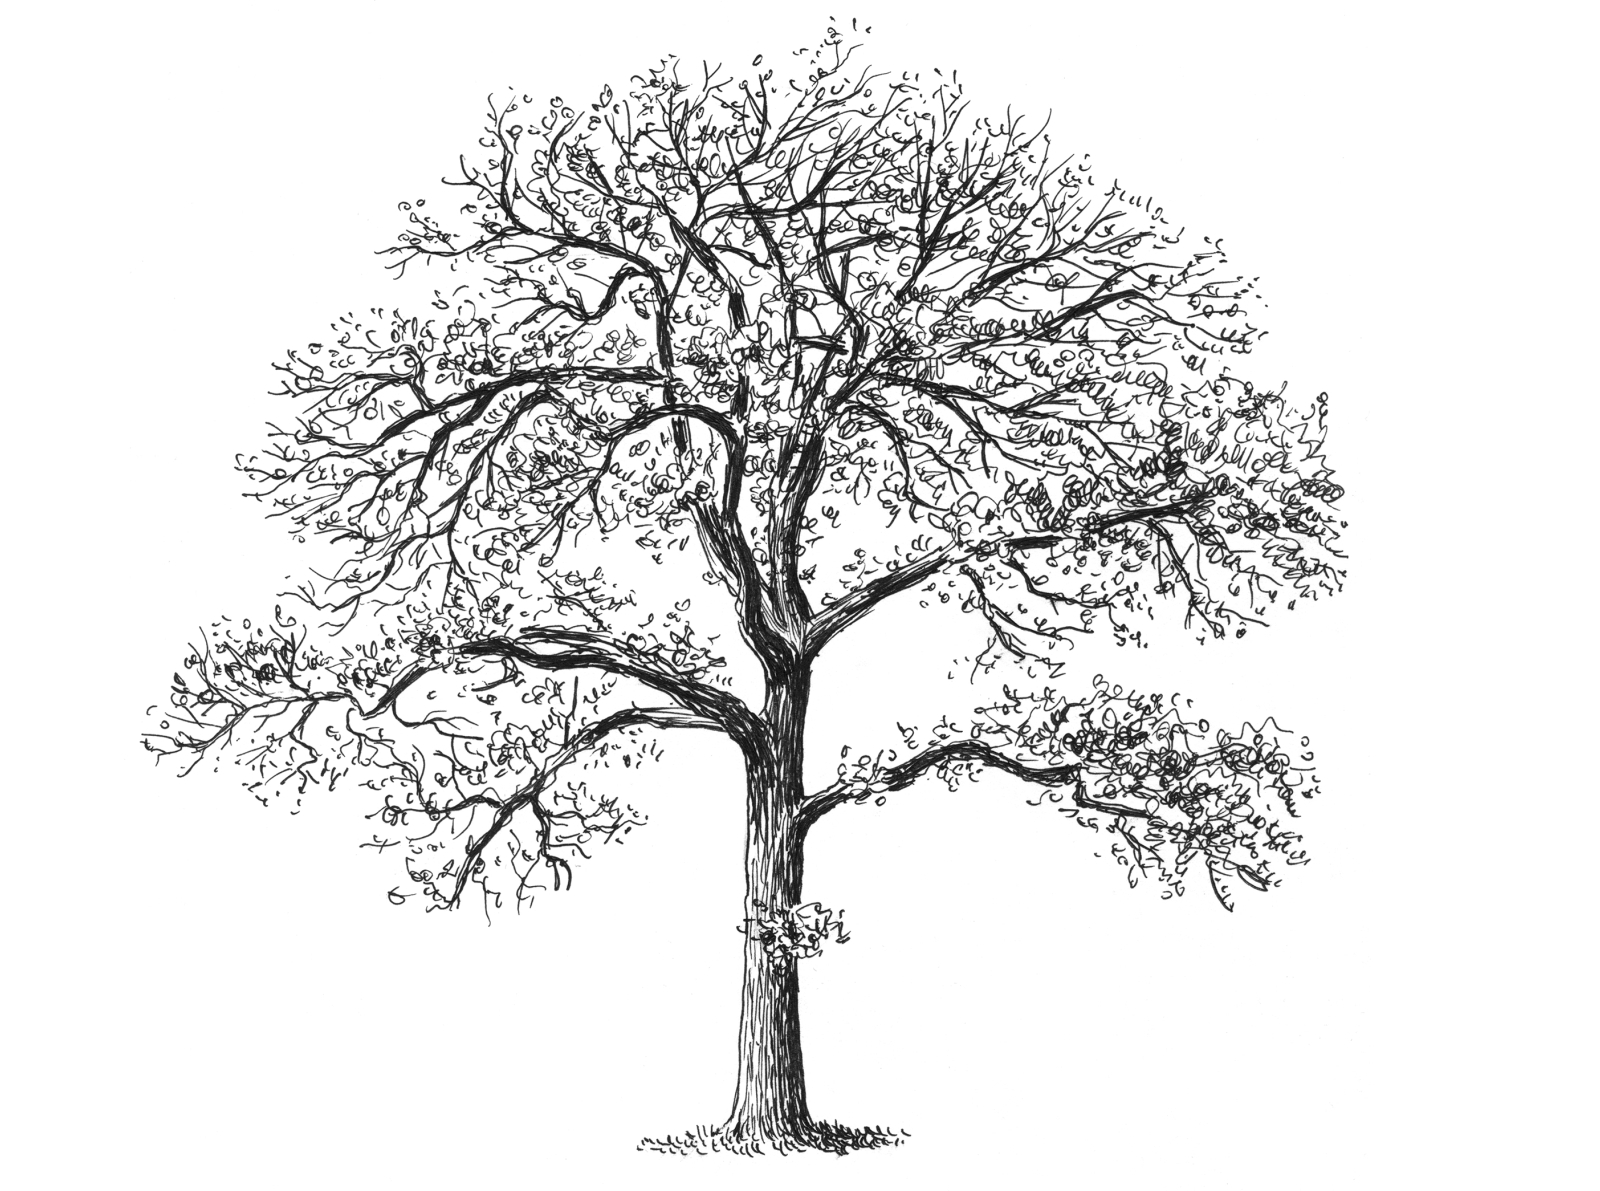 Tree Sketch by Landis Blair on Dribbble